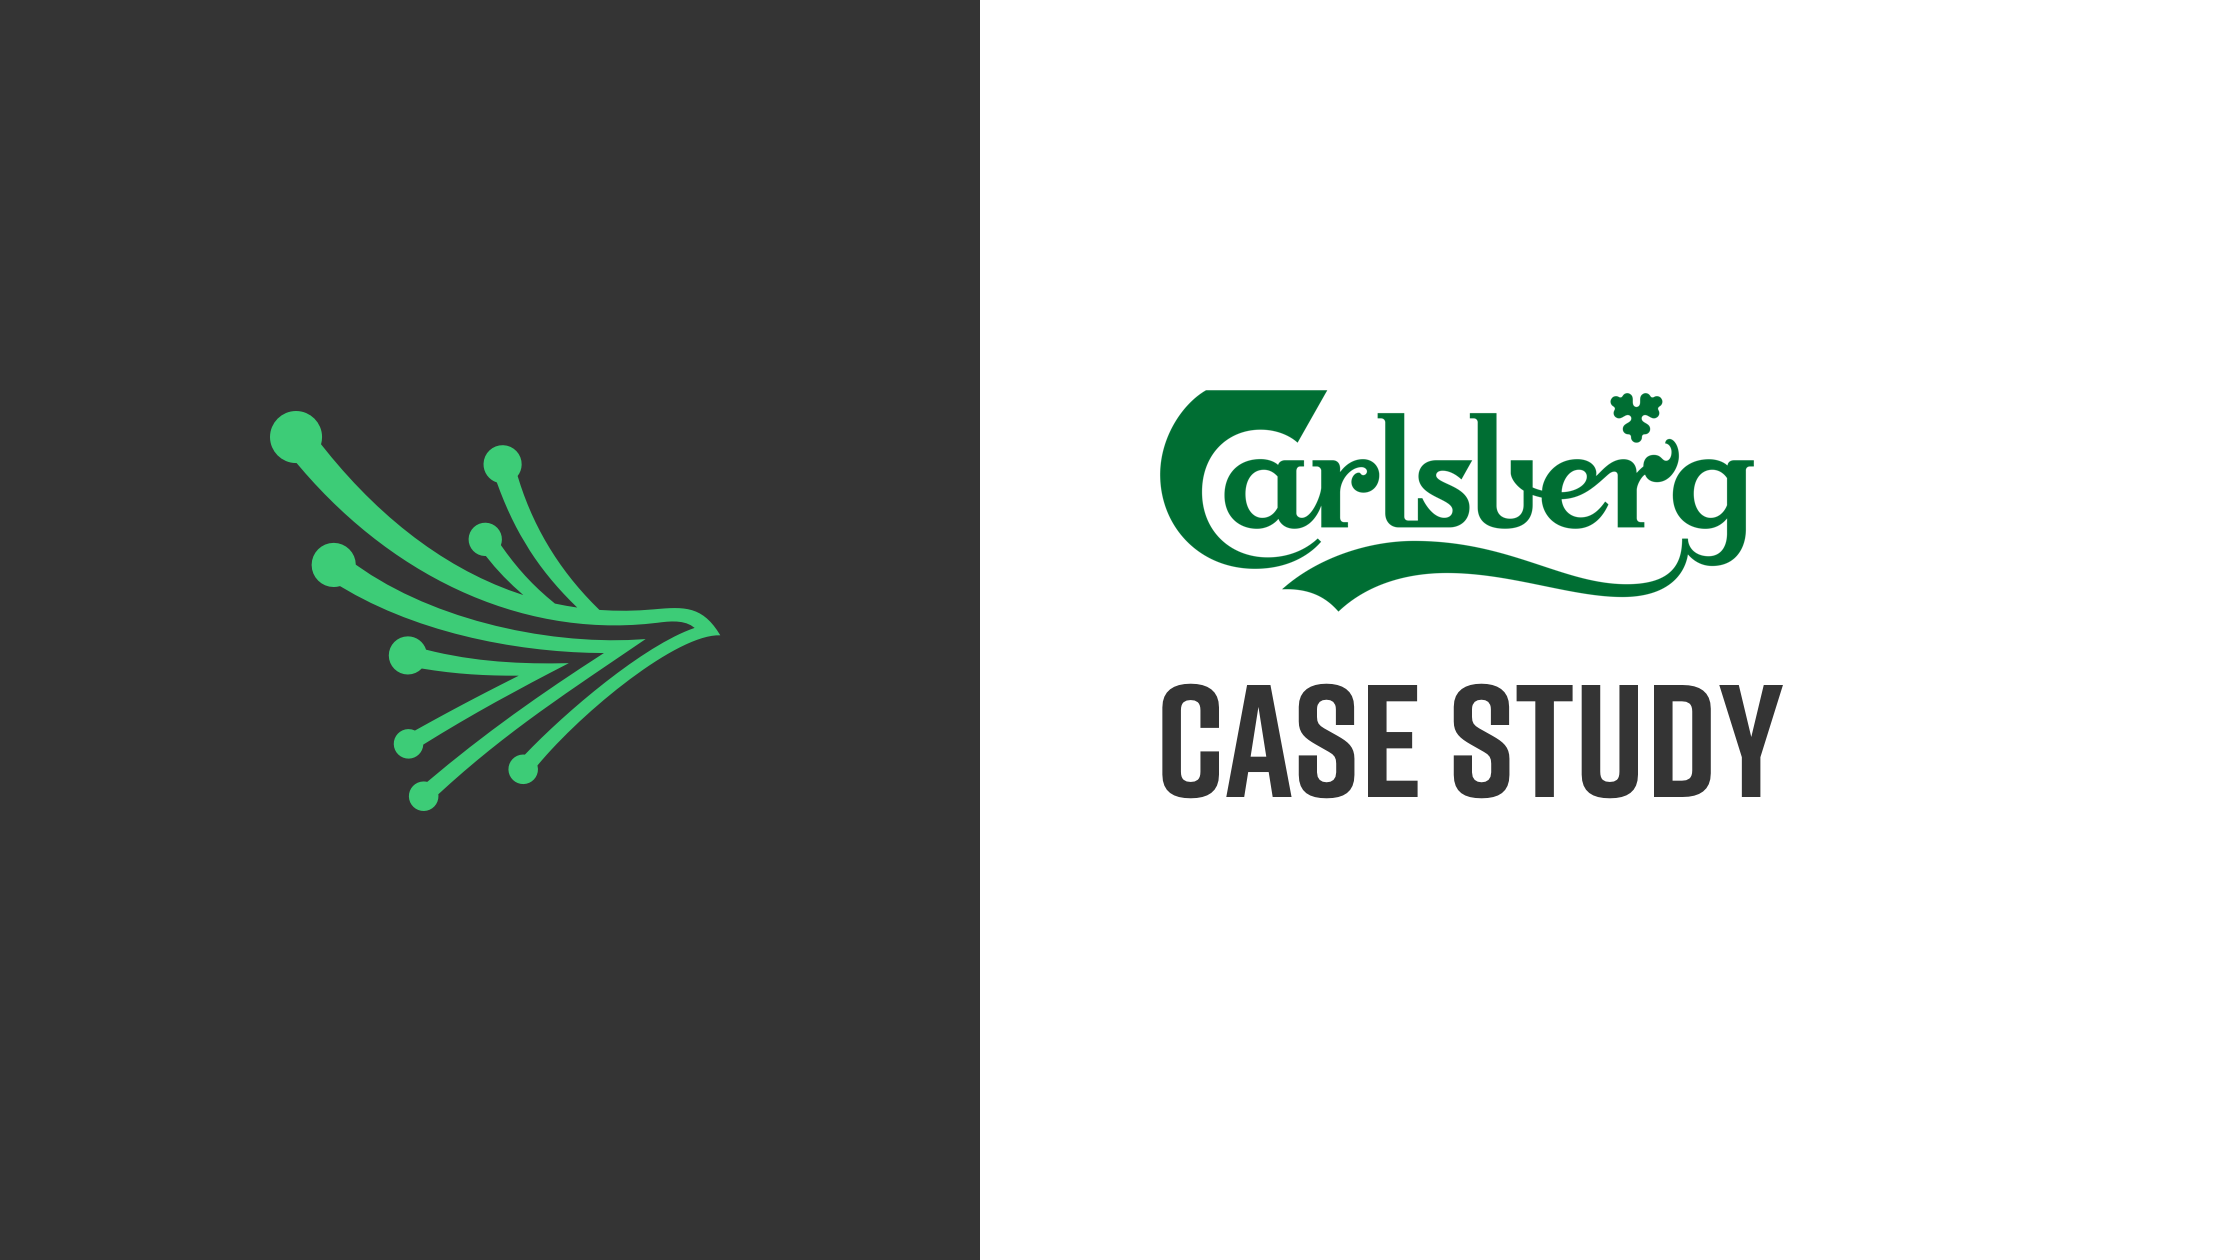 blackkite case study carlsberg